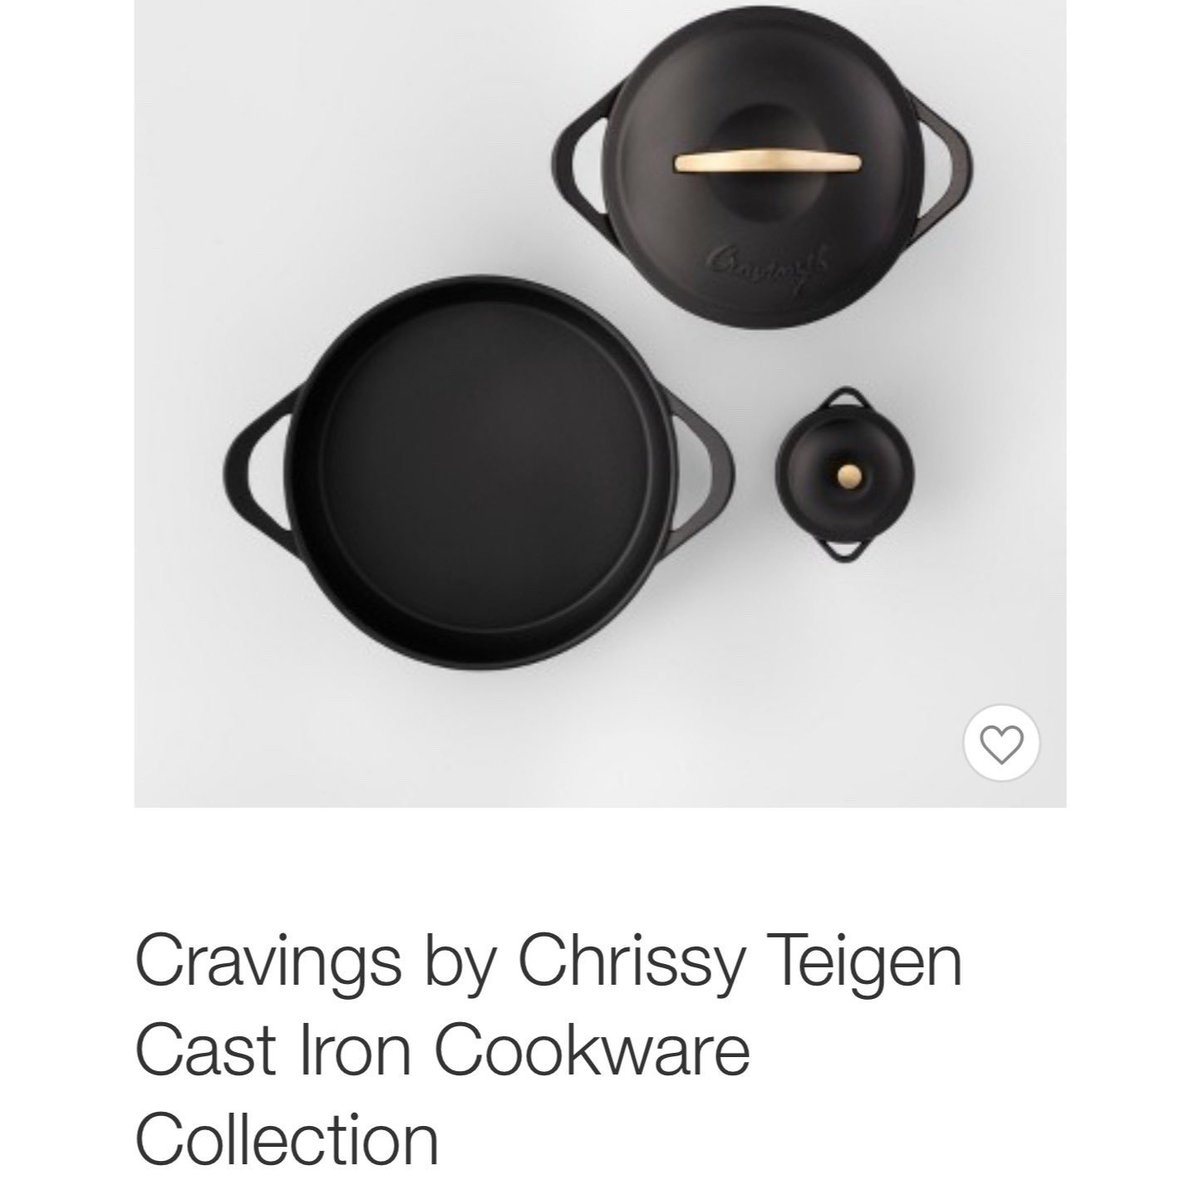 Chrissy Teigen Cravings Cookware Target - Review